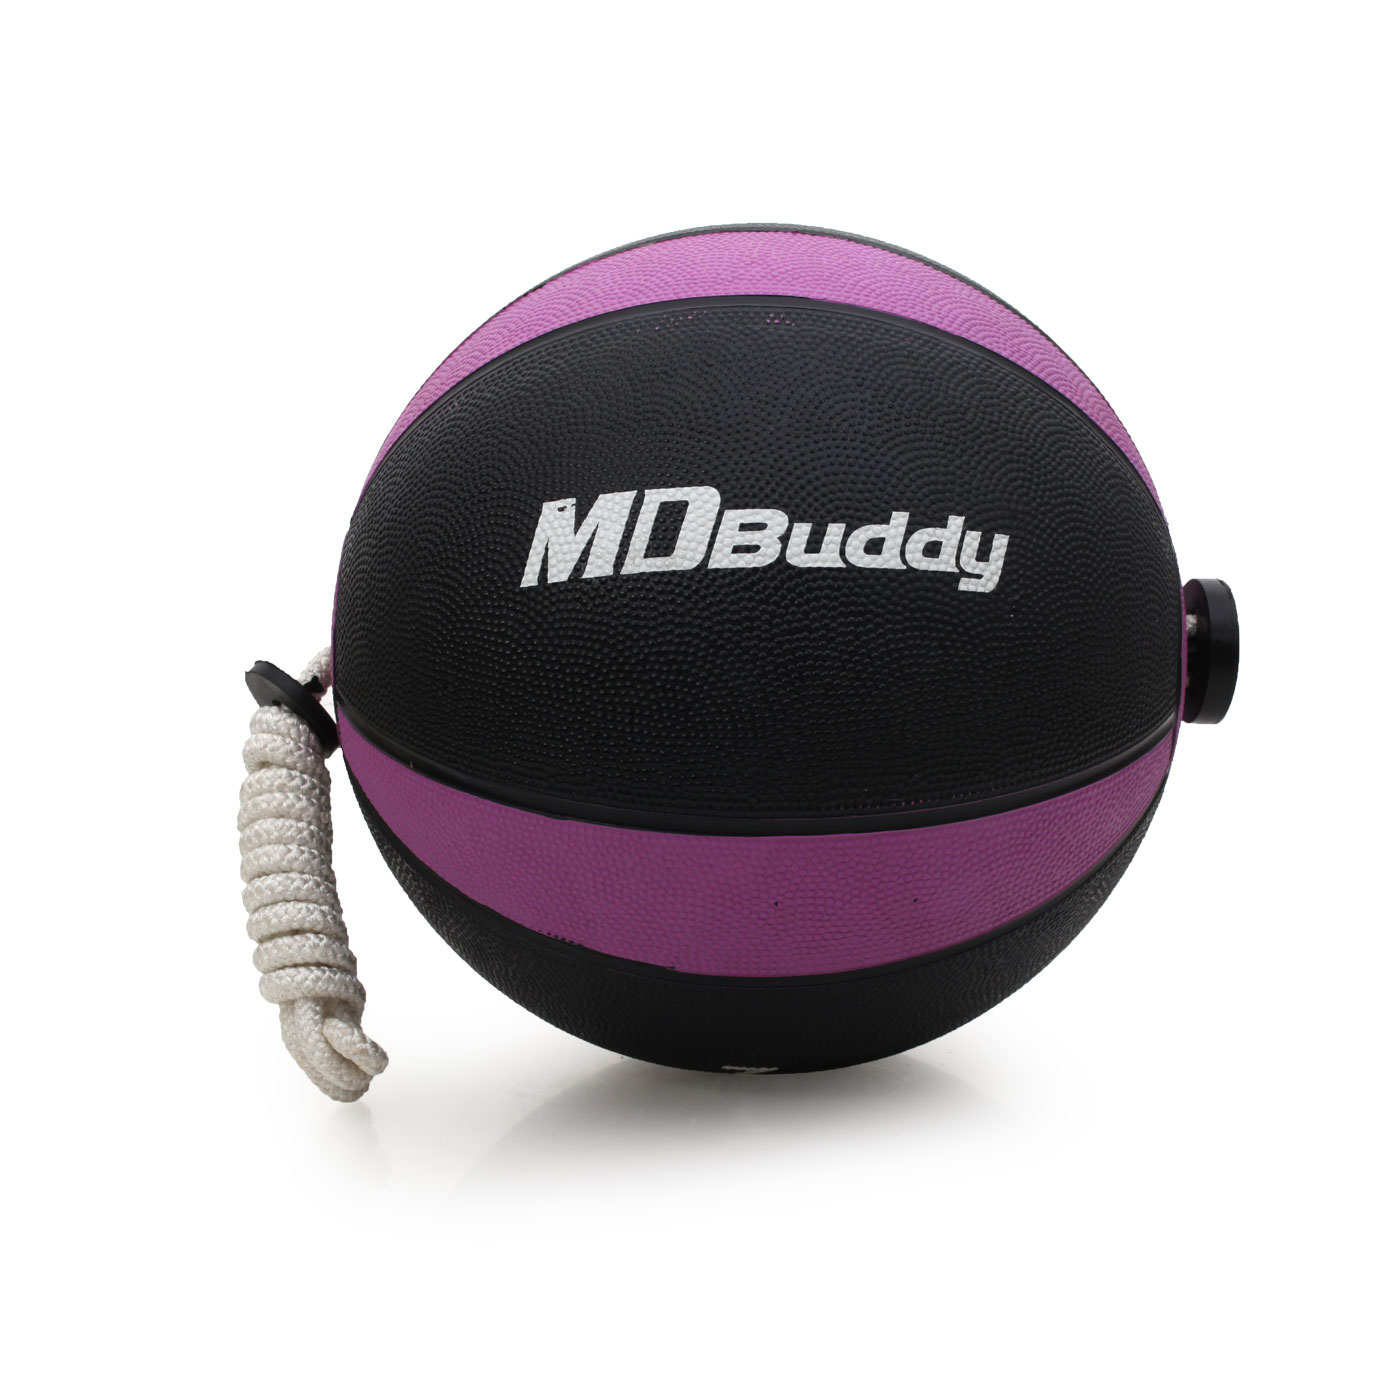 MDBuddy 帶繩藥球(7KG) 6010601 - 隨機